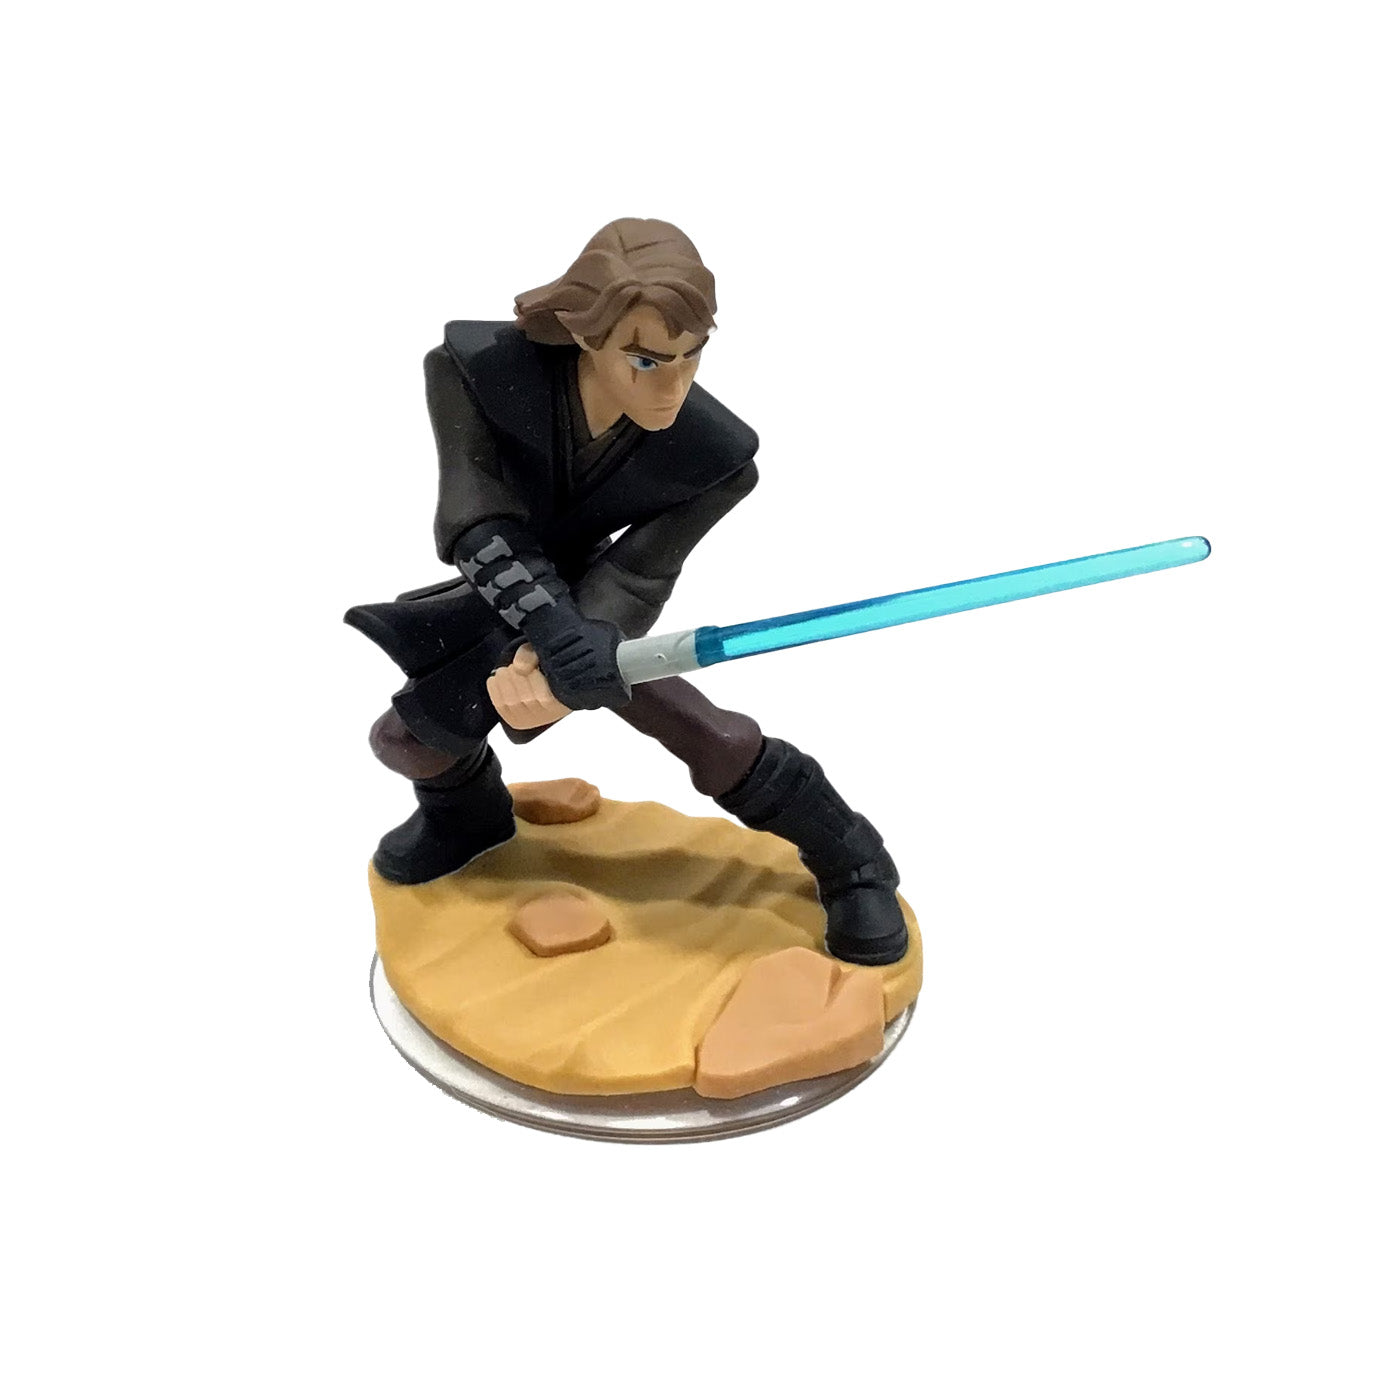 Disney Infinity 3.0 Character: Anakin Skywalker